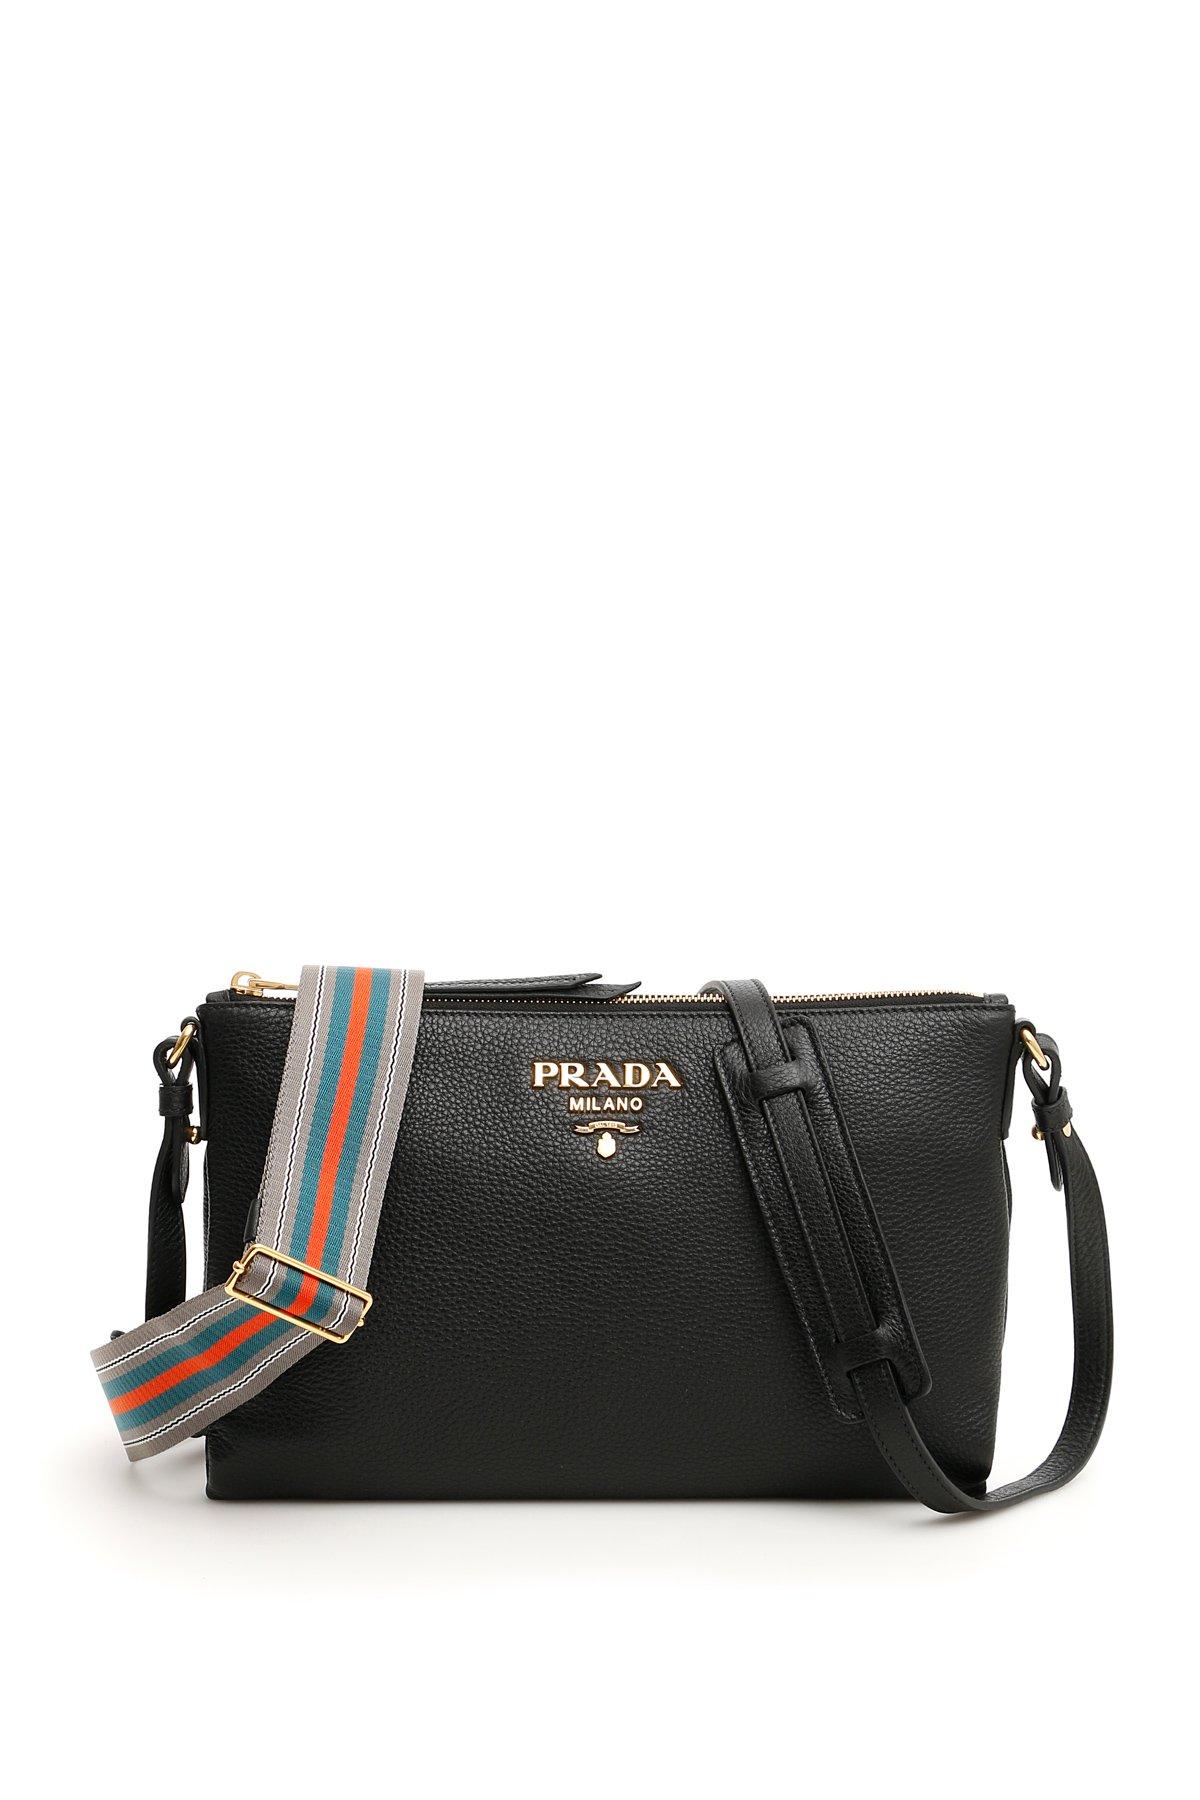 Prada Coloured Strap Crossbody Bag in Black | Lyst